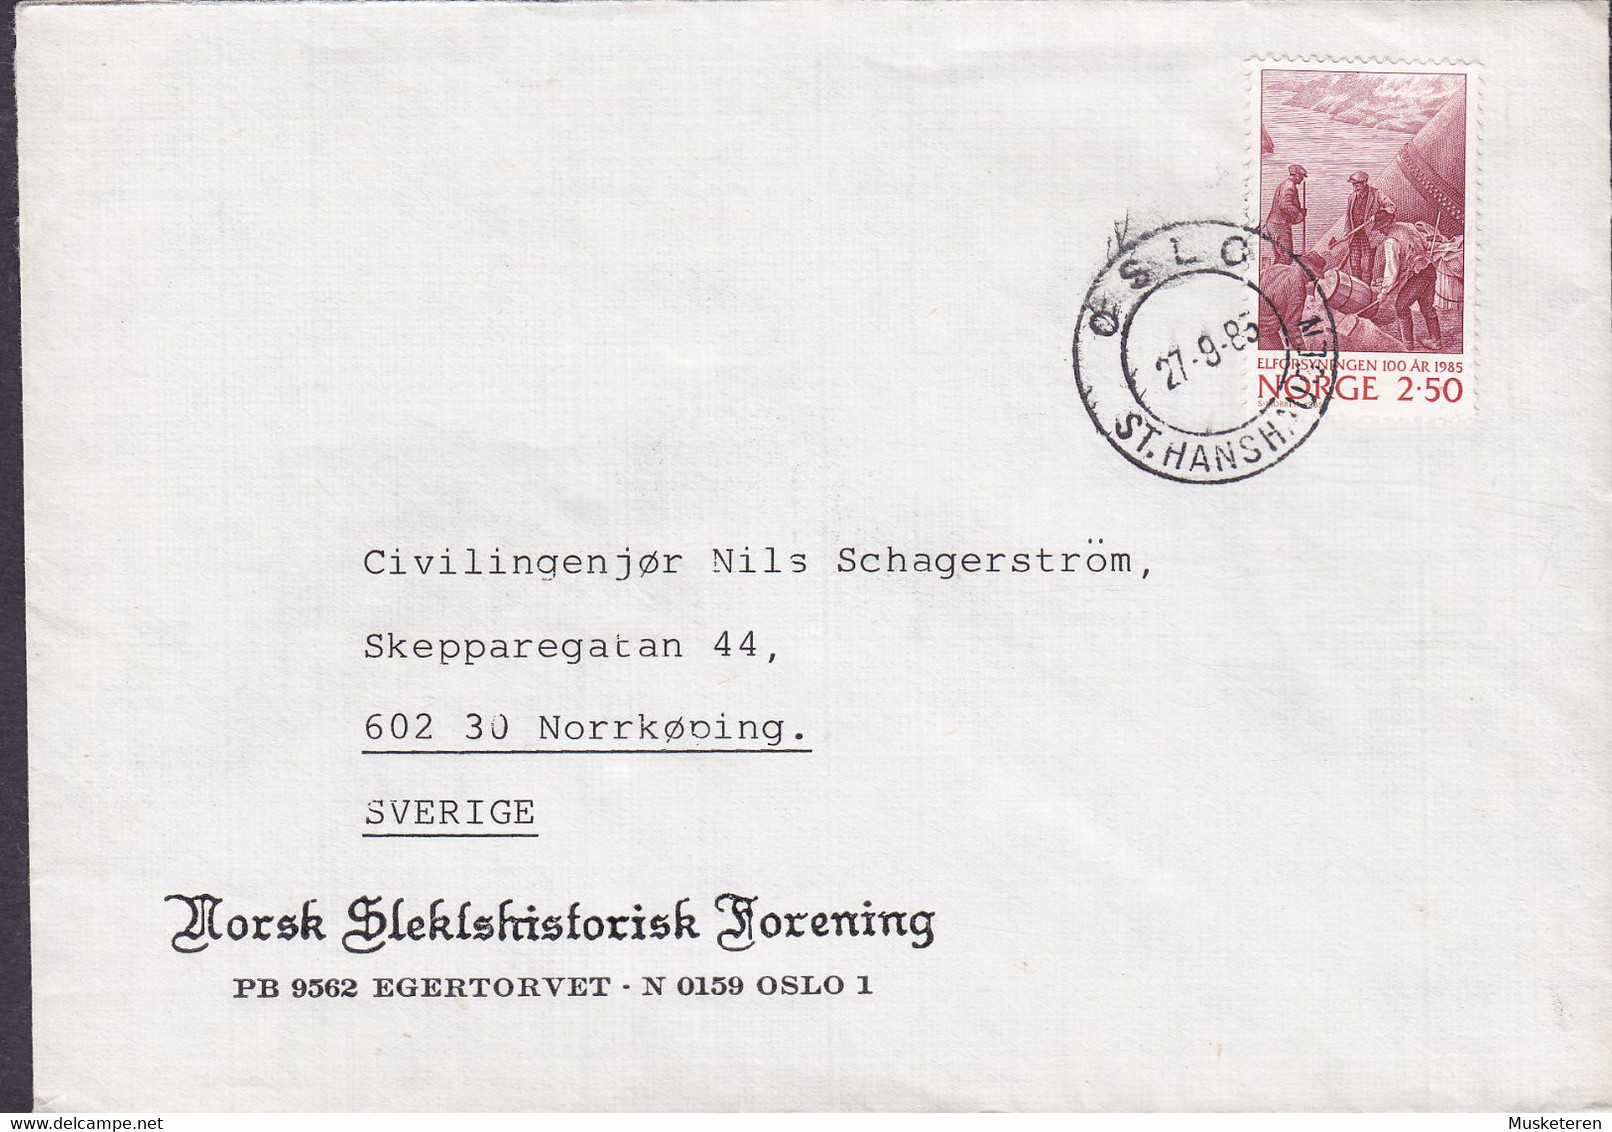 Norway NORSK SLEKTSHISTORISK FORENING, OSLO St. Hanshausen 1985 Cover Brief NORRKÖPING Sweden Elforsyningen 100 År - Covers & Documents